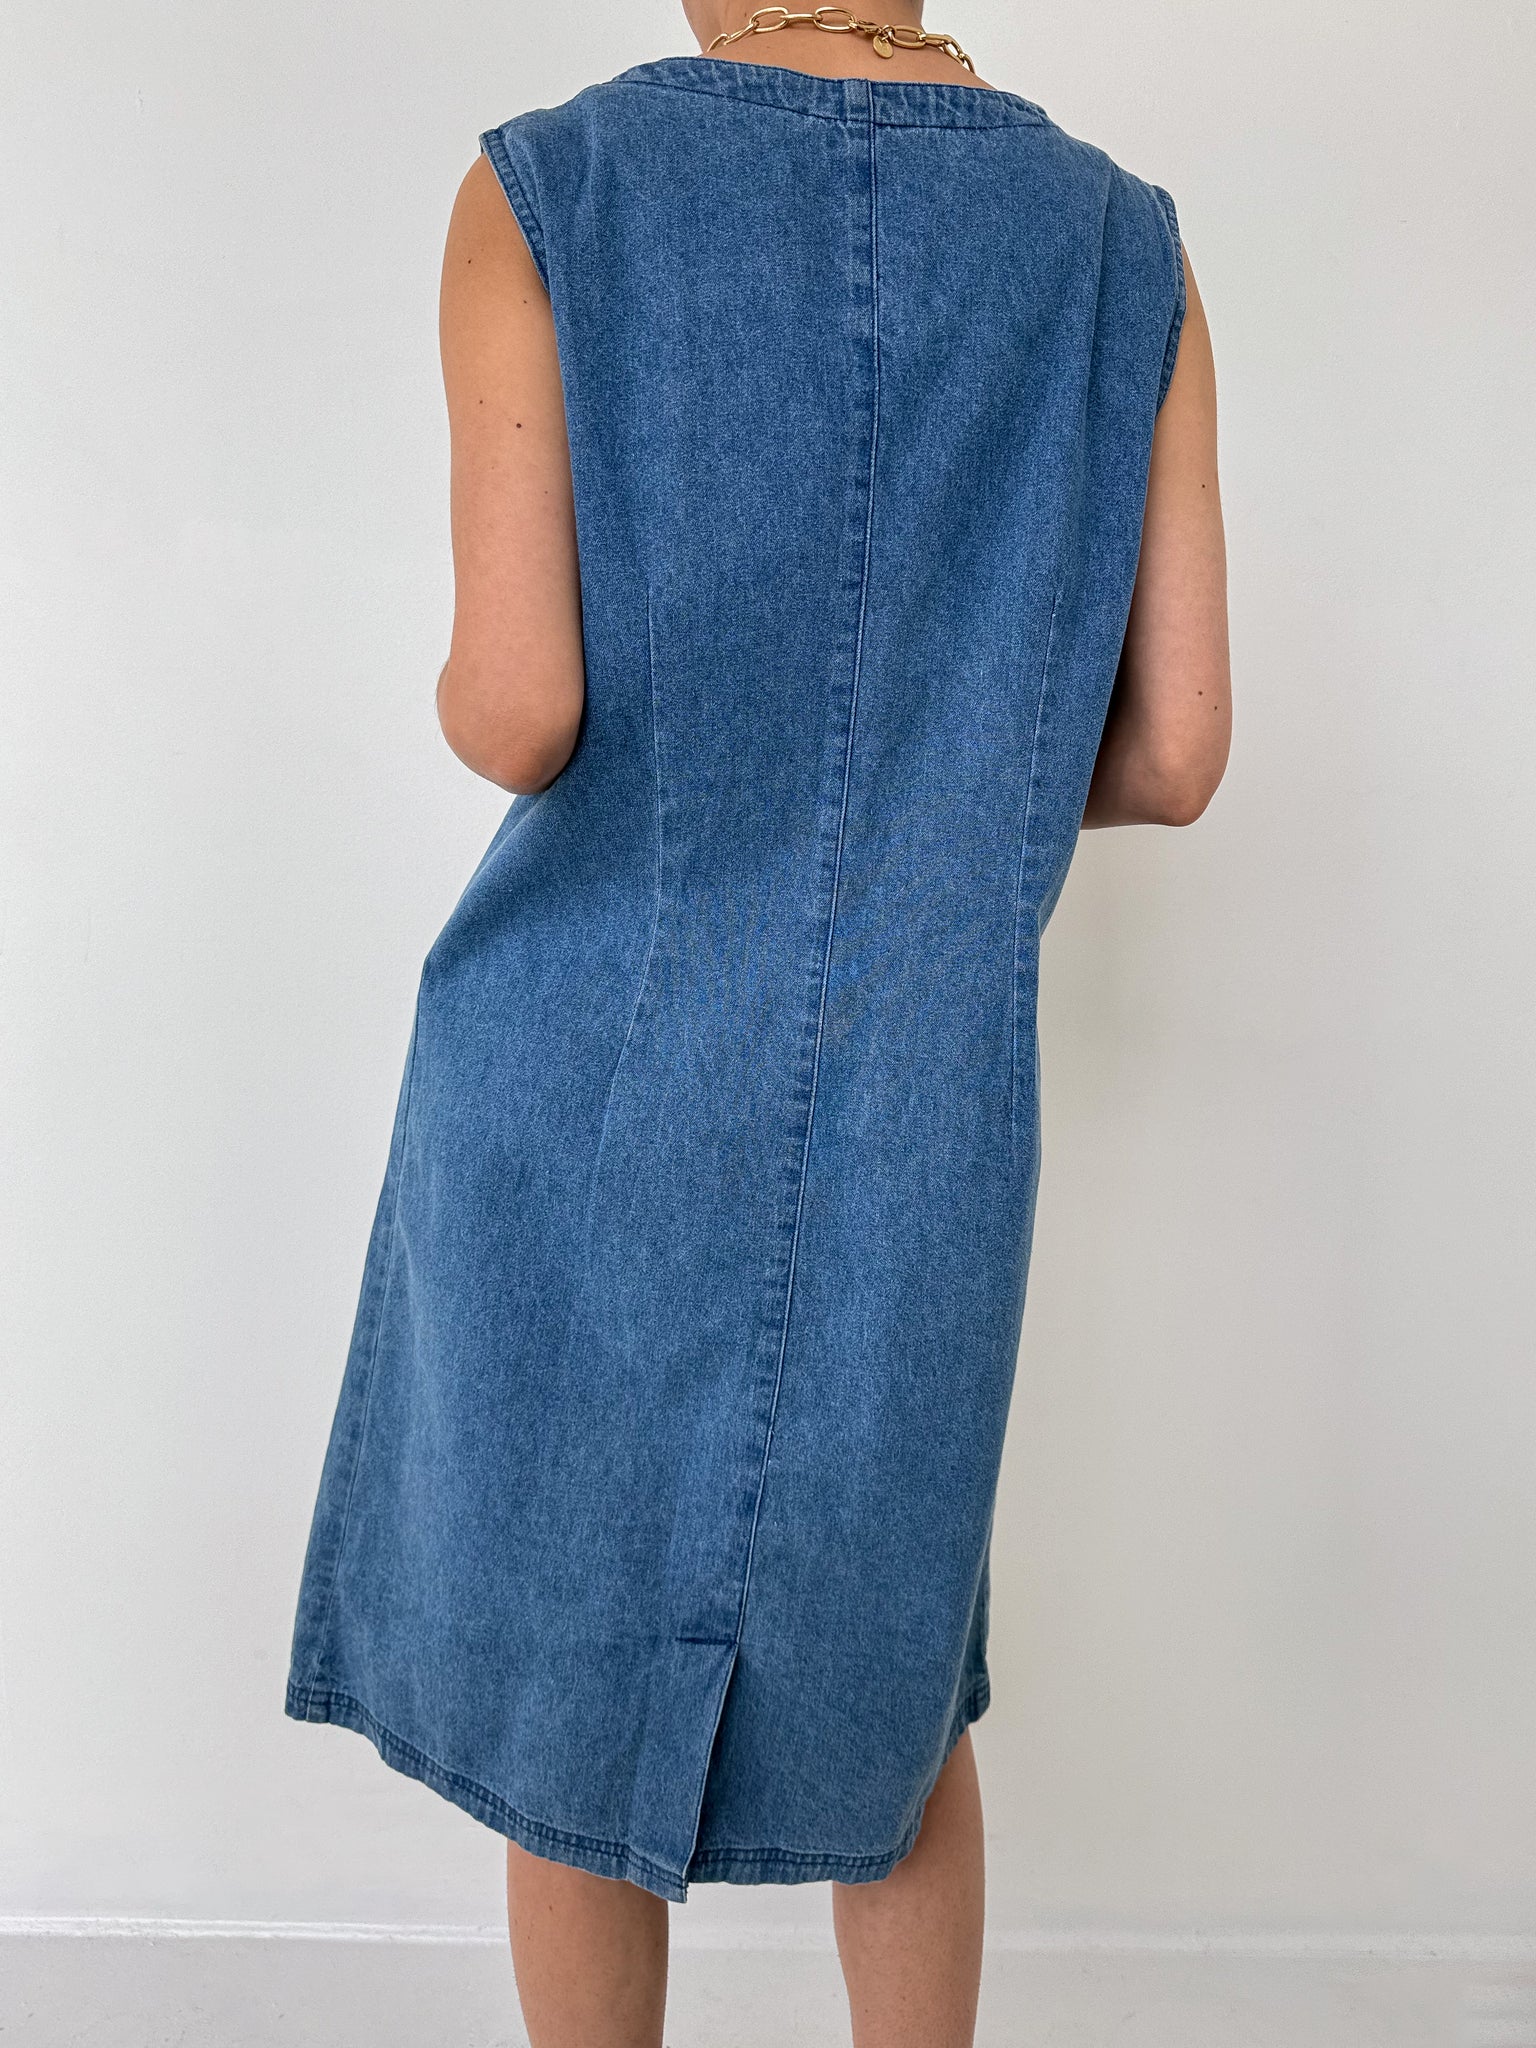 Vintage 90s Bleu Denim Sleeveless Dress